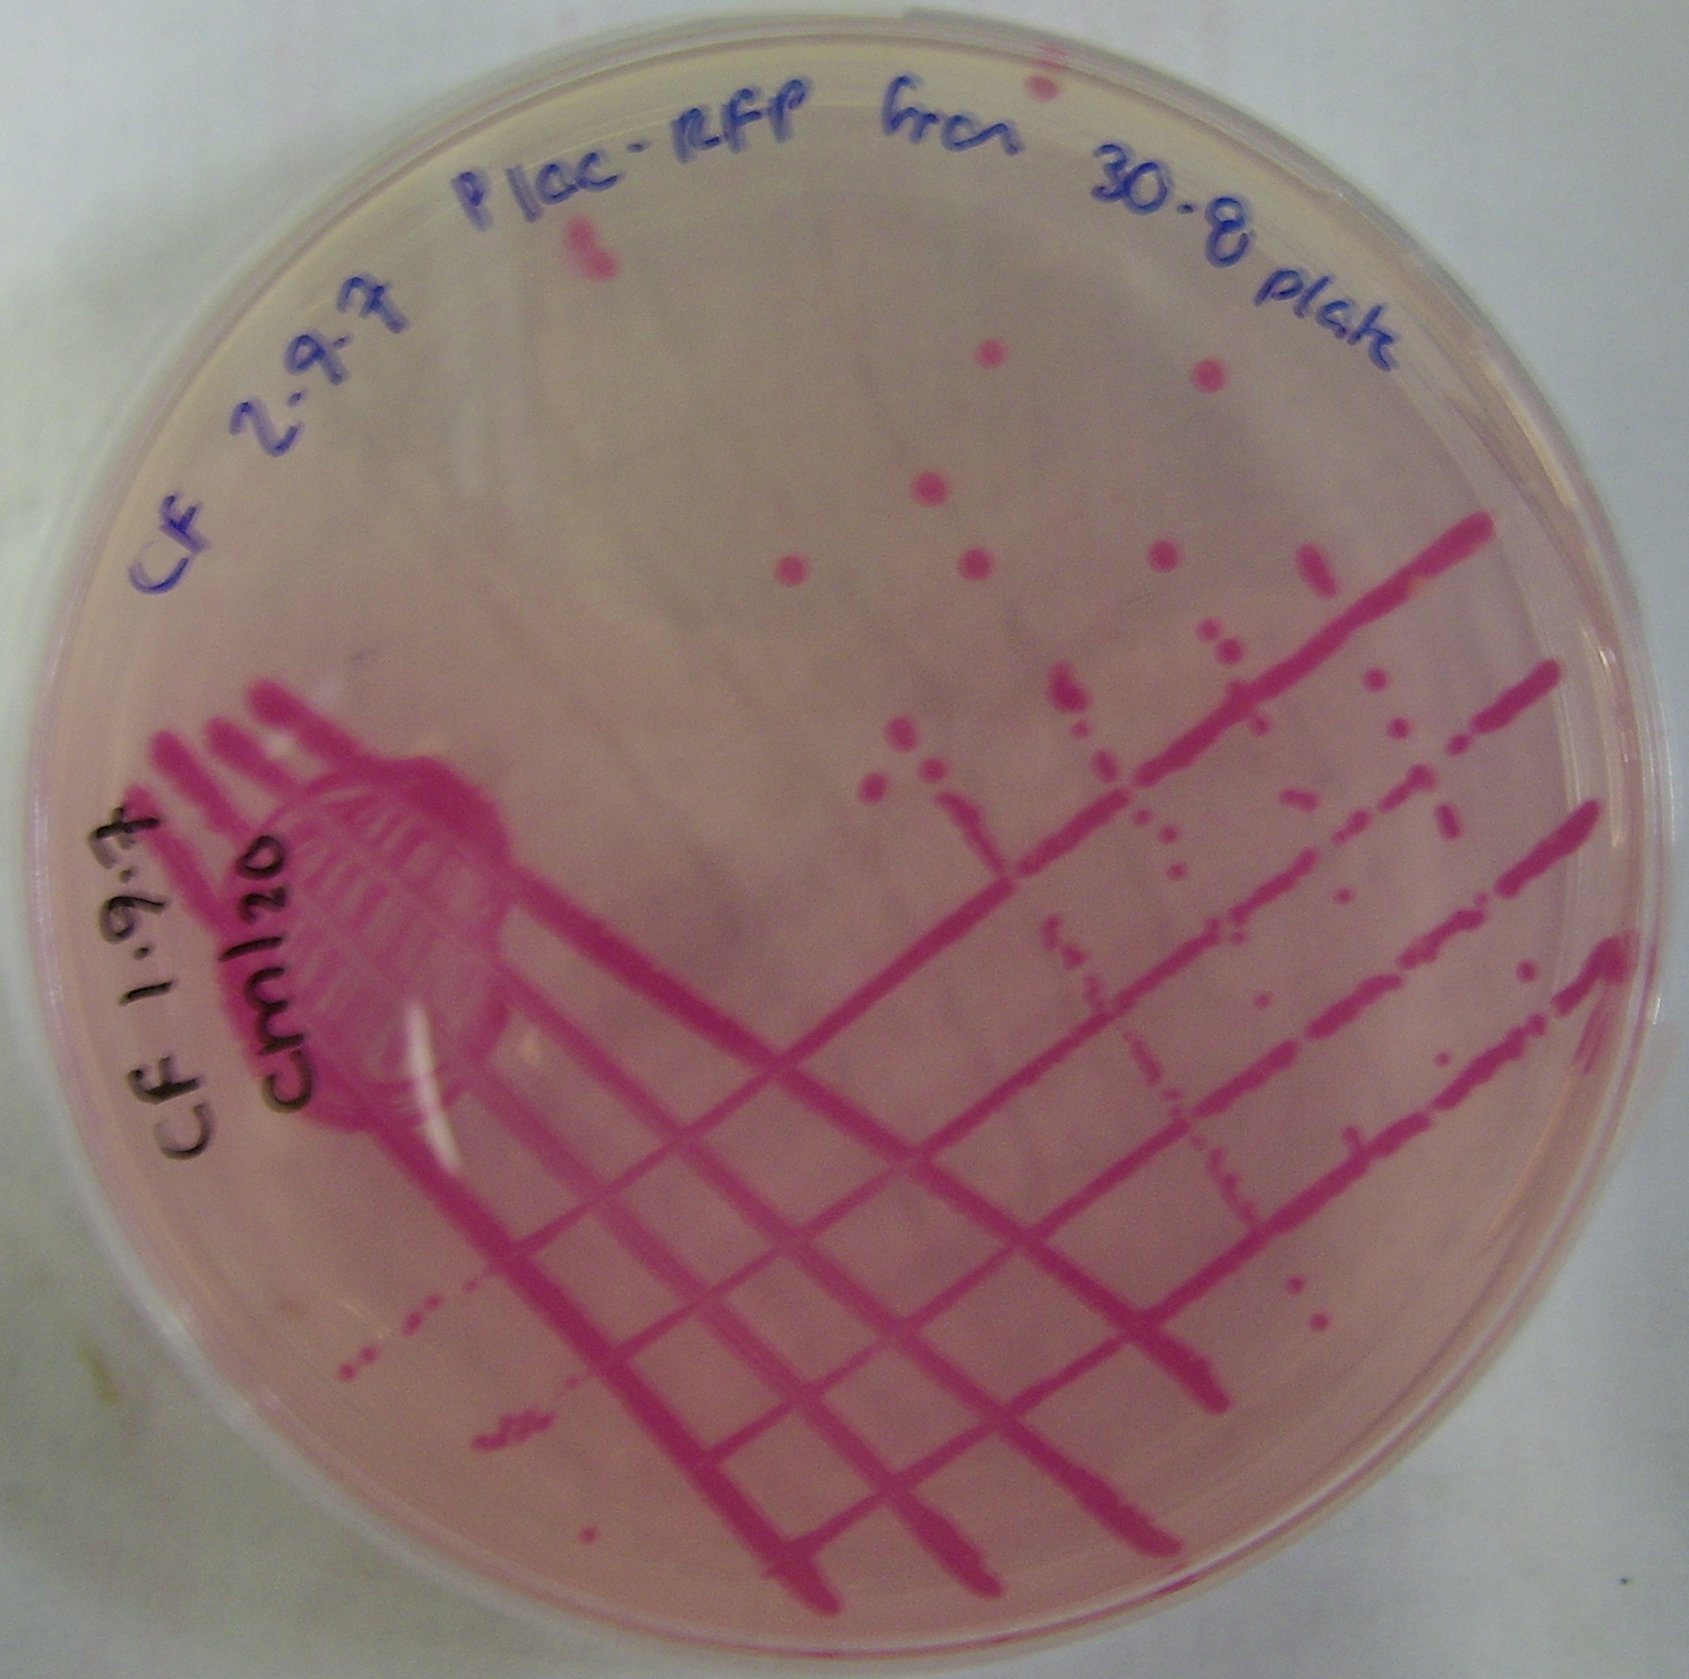 PLac-RFP-pTG262 Bacillus.JPG